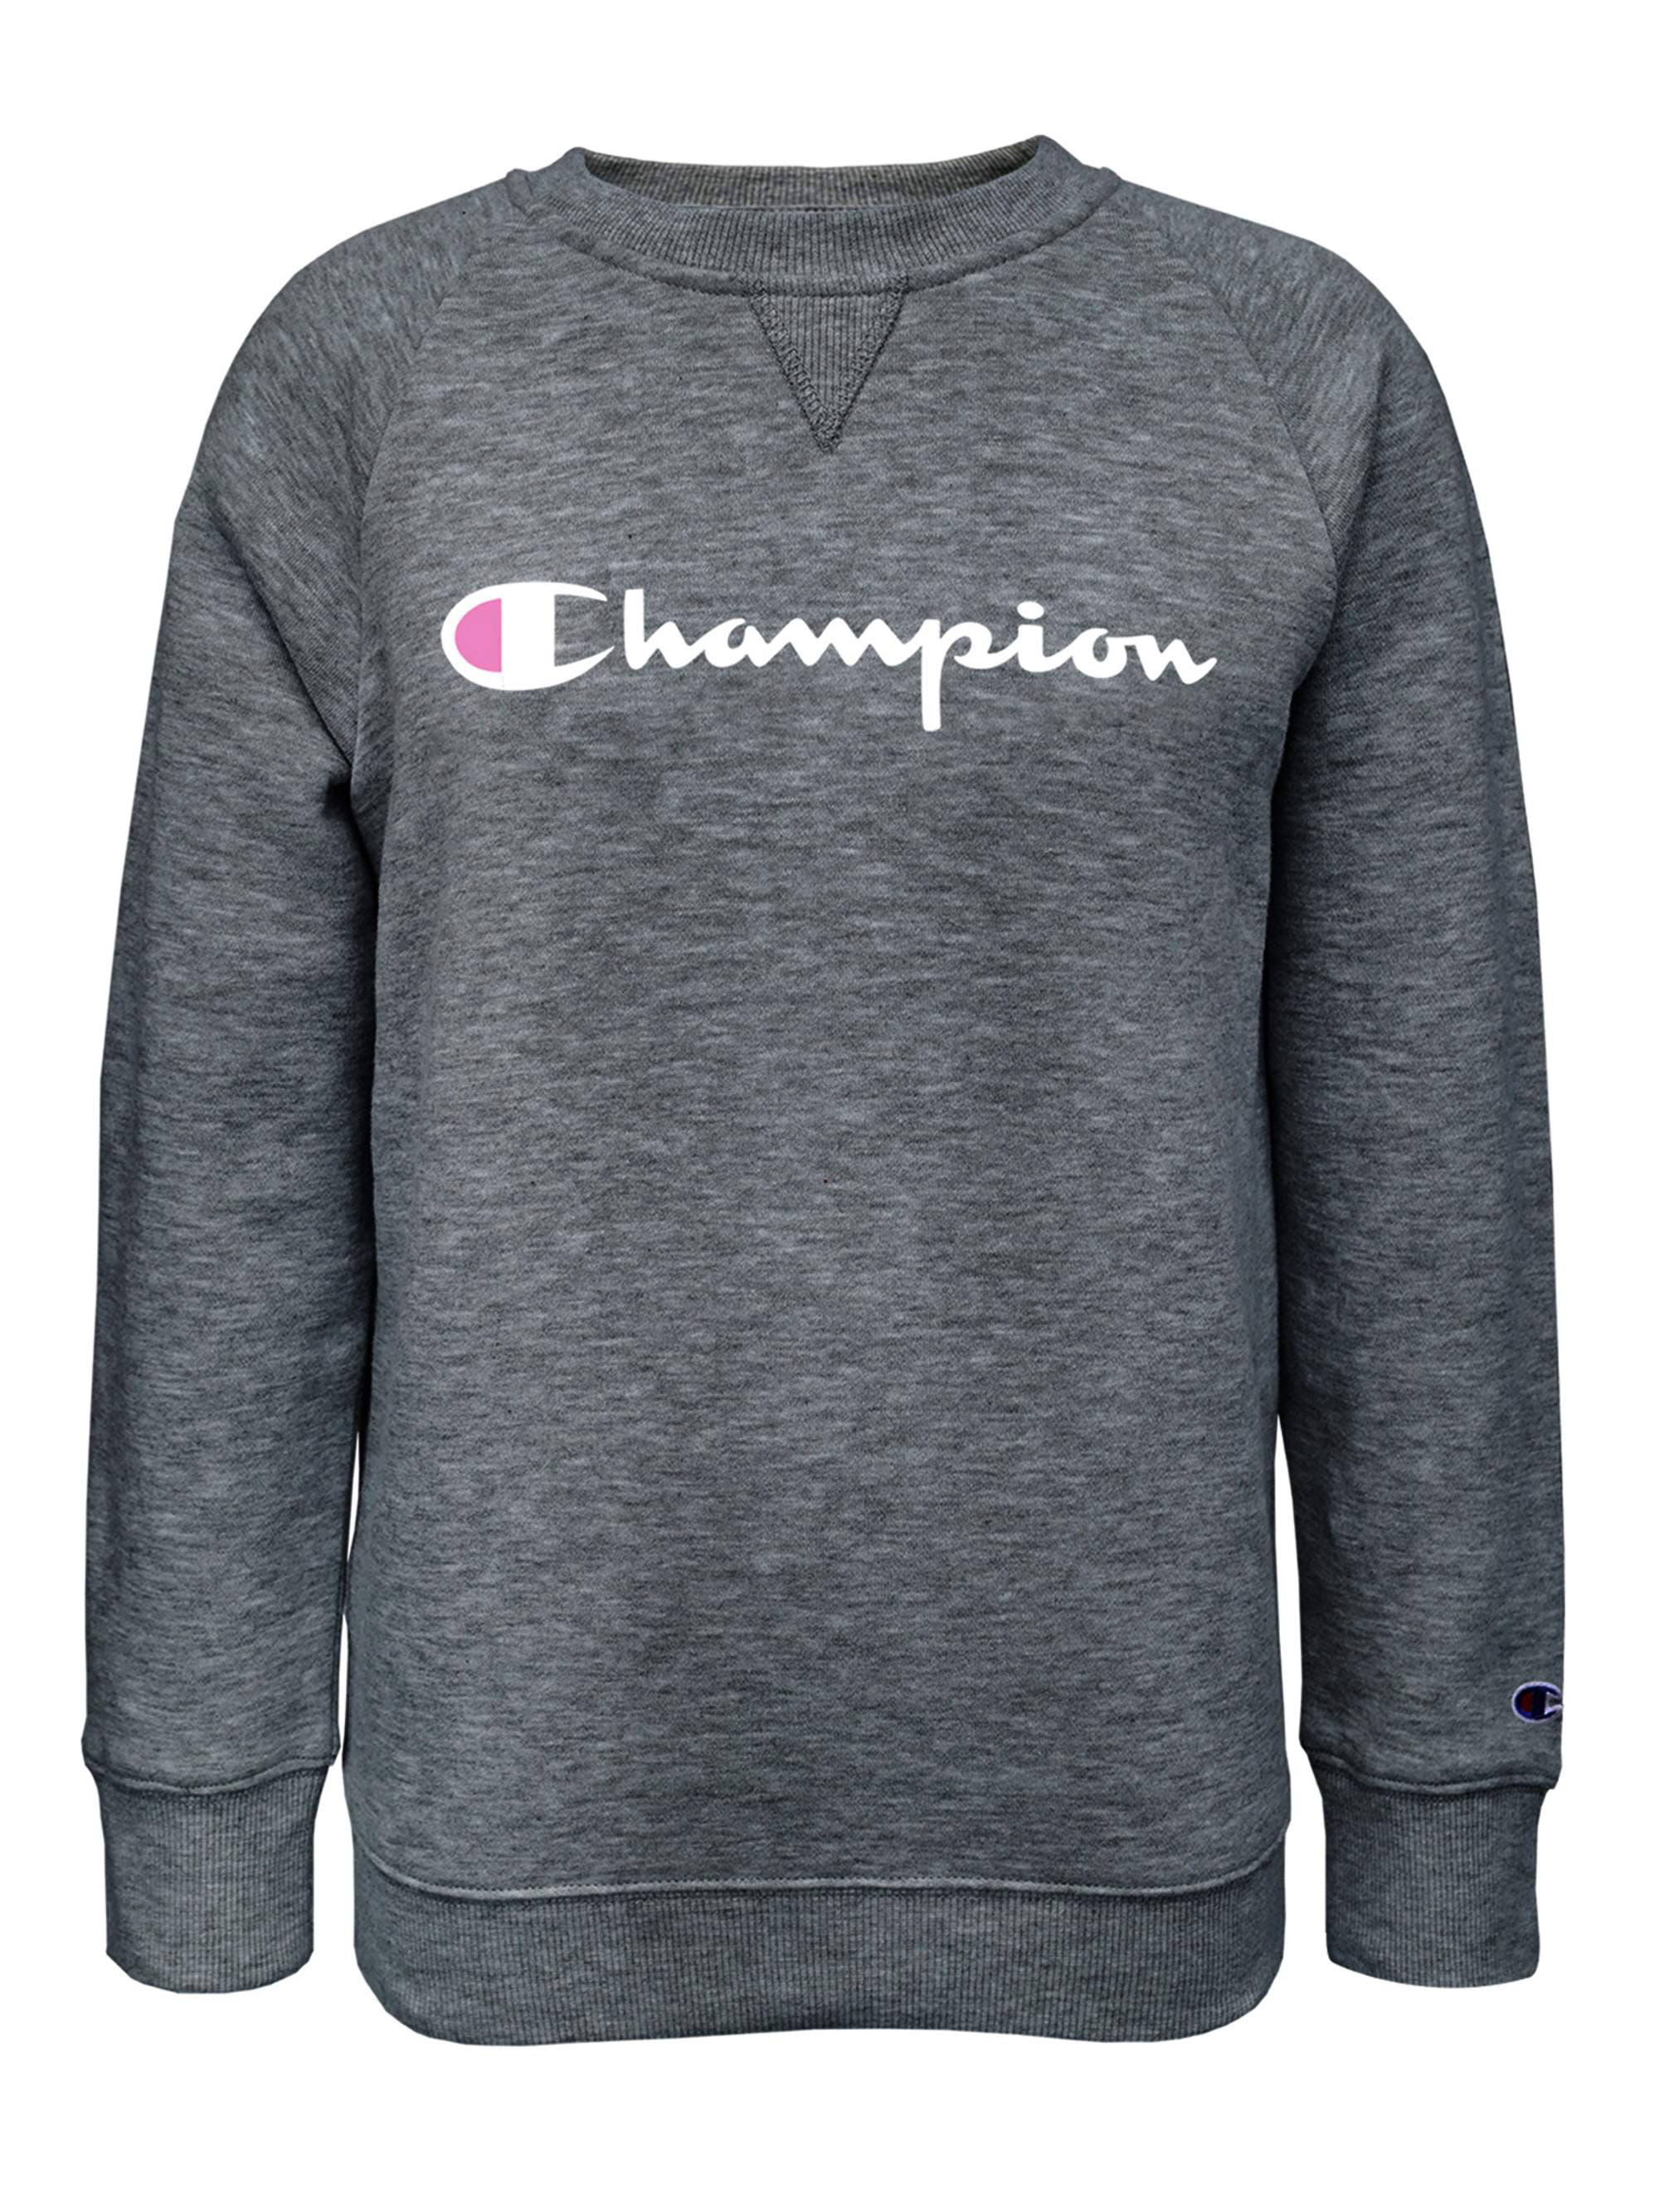 Champion Girls Classic Logo Fleece Crew Sweatshirt Sizes 7 16